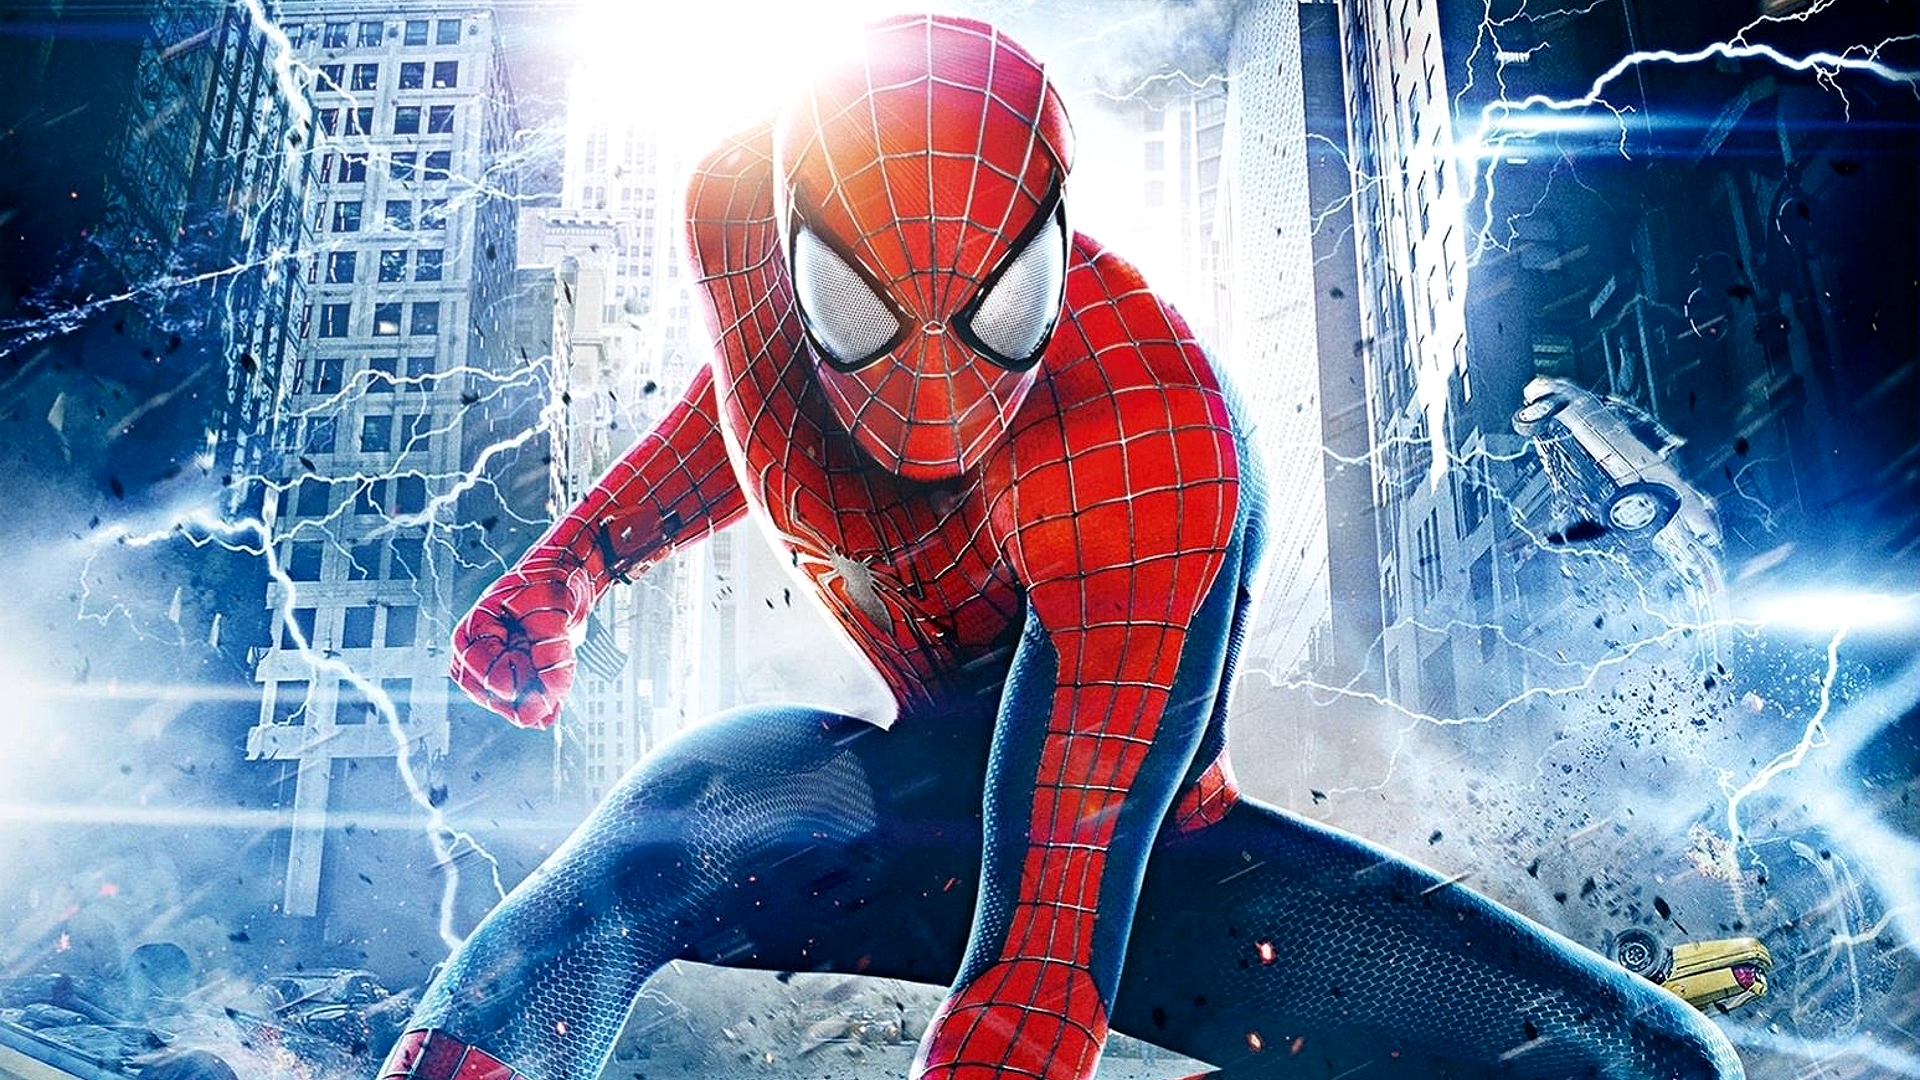 The Amazing Spider-Man 2 - Wikipedia